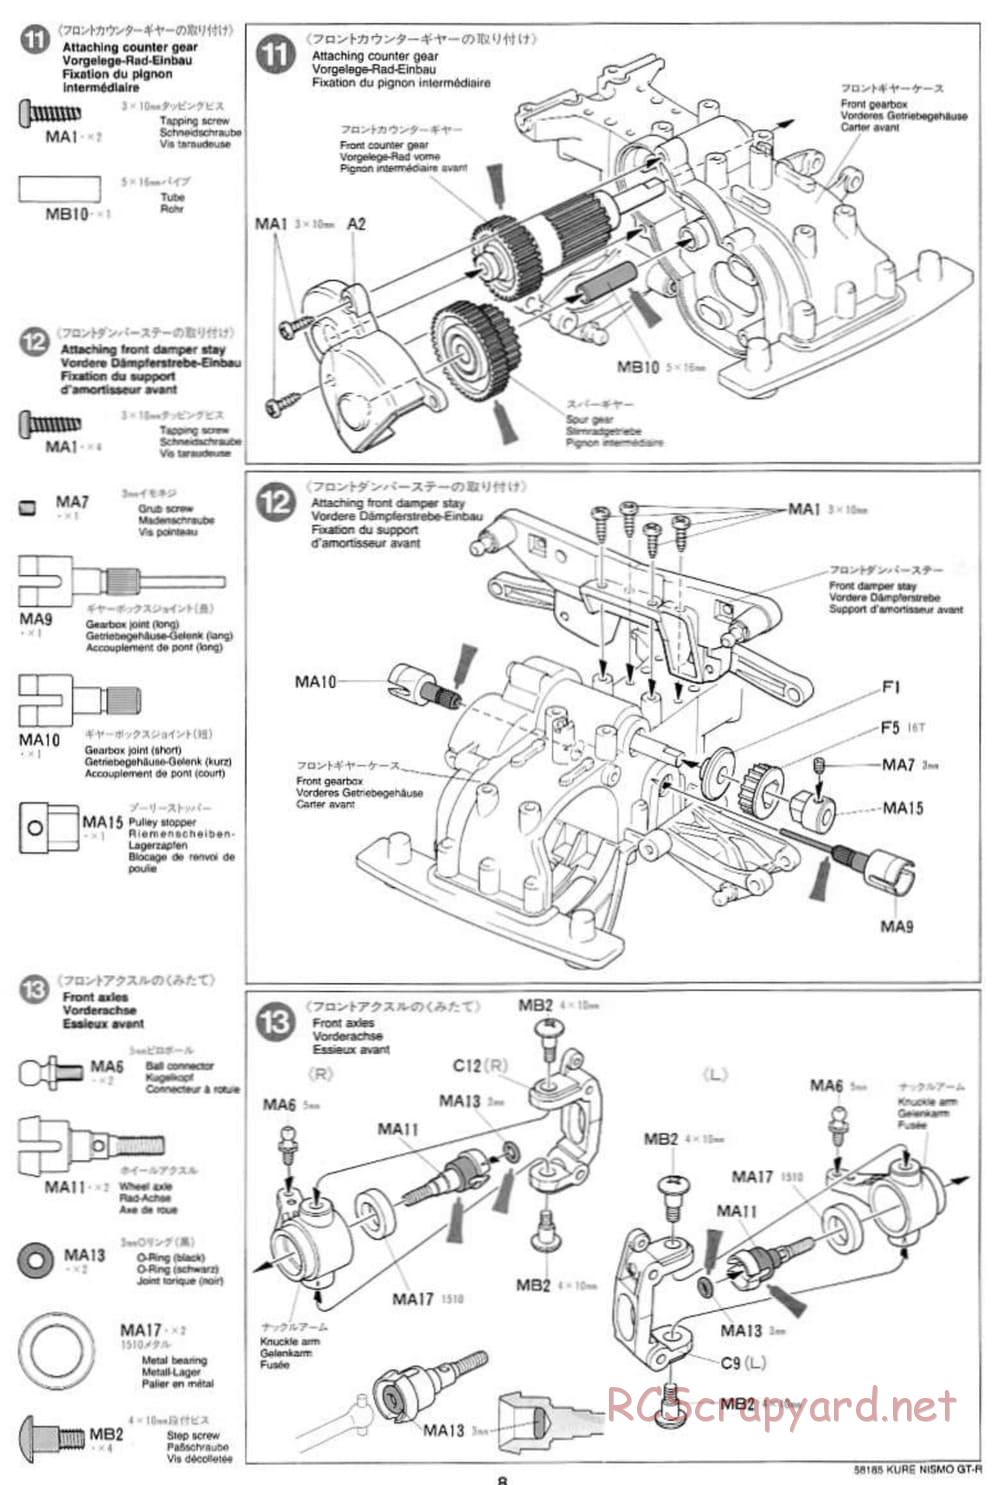 Tamiya - Kure Nismo GT-R - TA-03F Chassis - Manual - Page 8